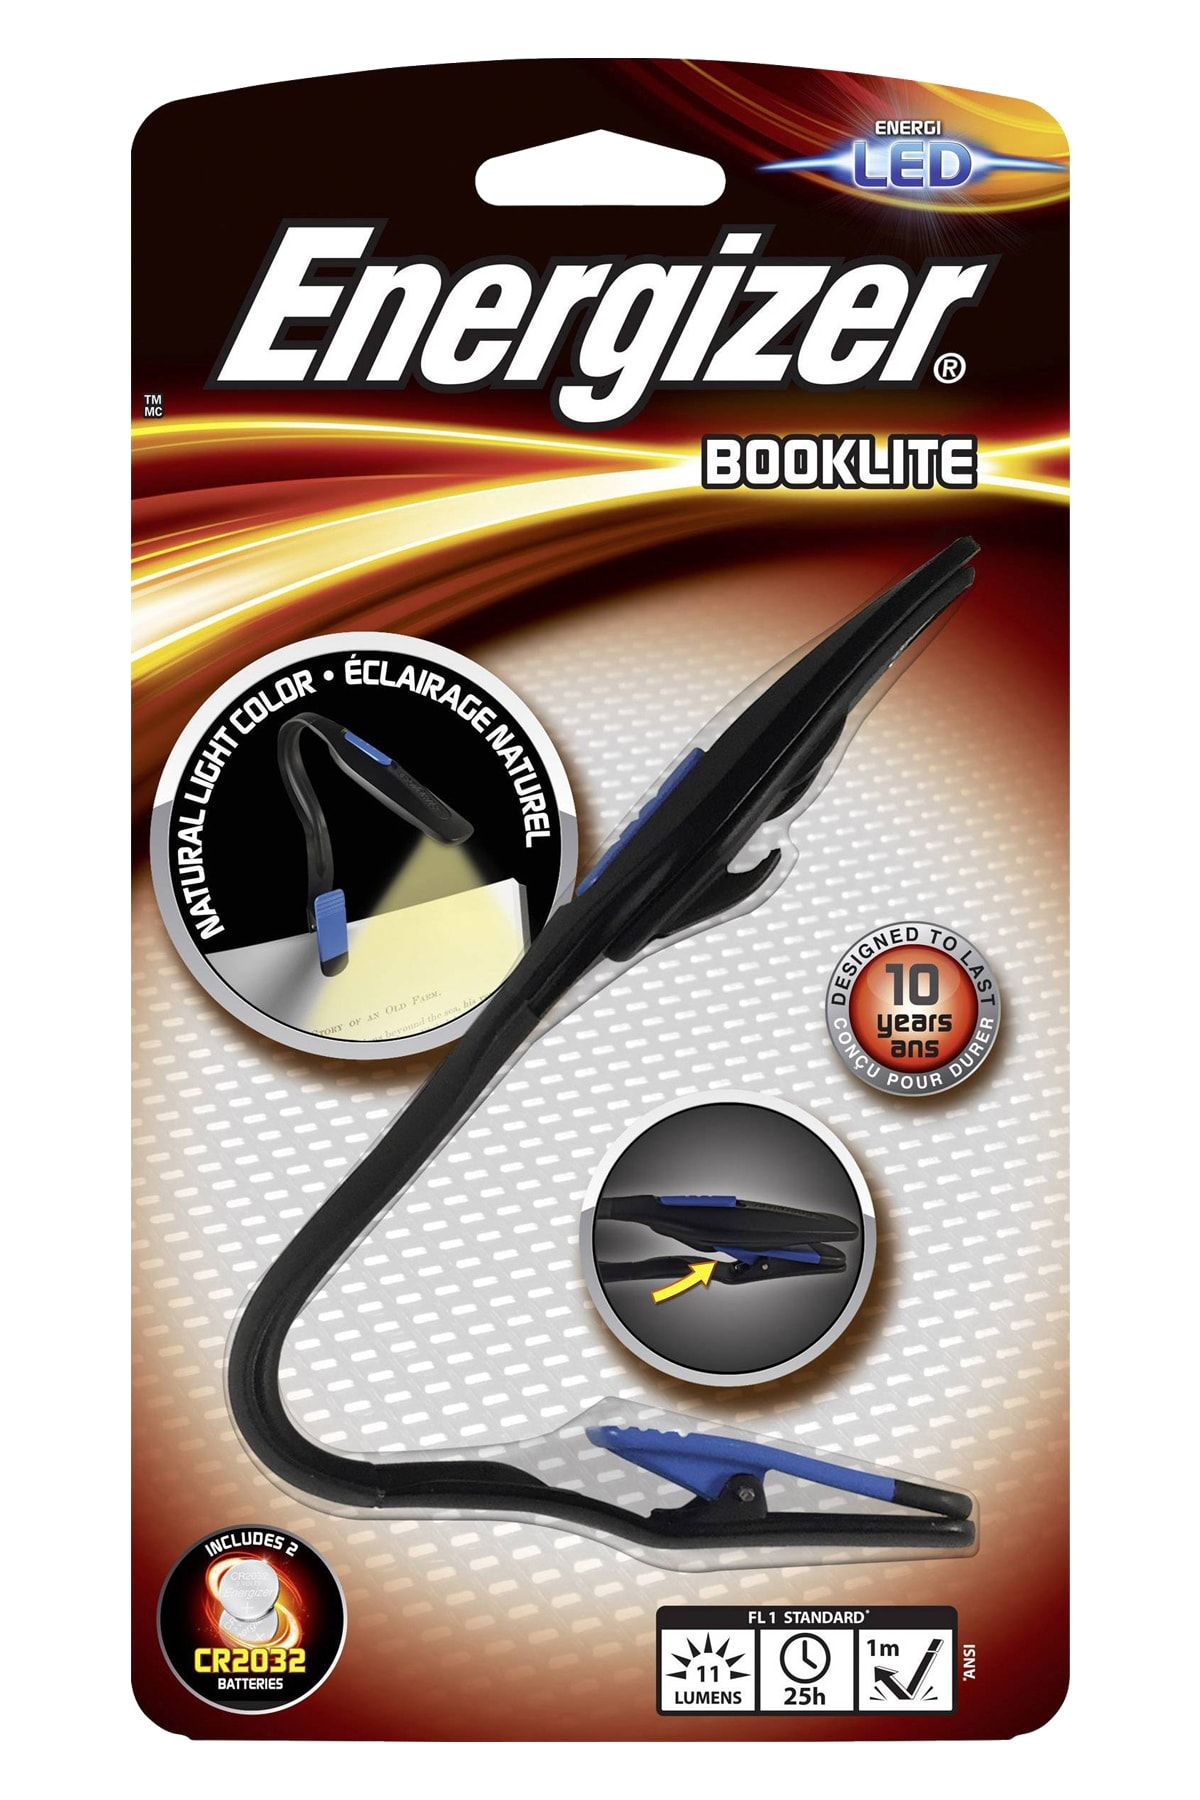 Energizer Fener FL Booklight batt New